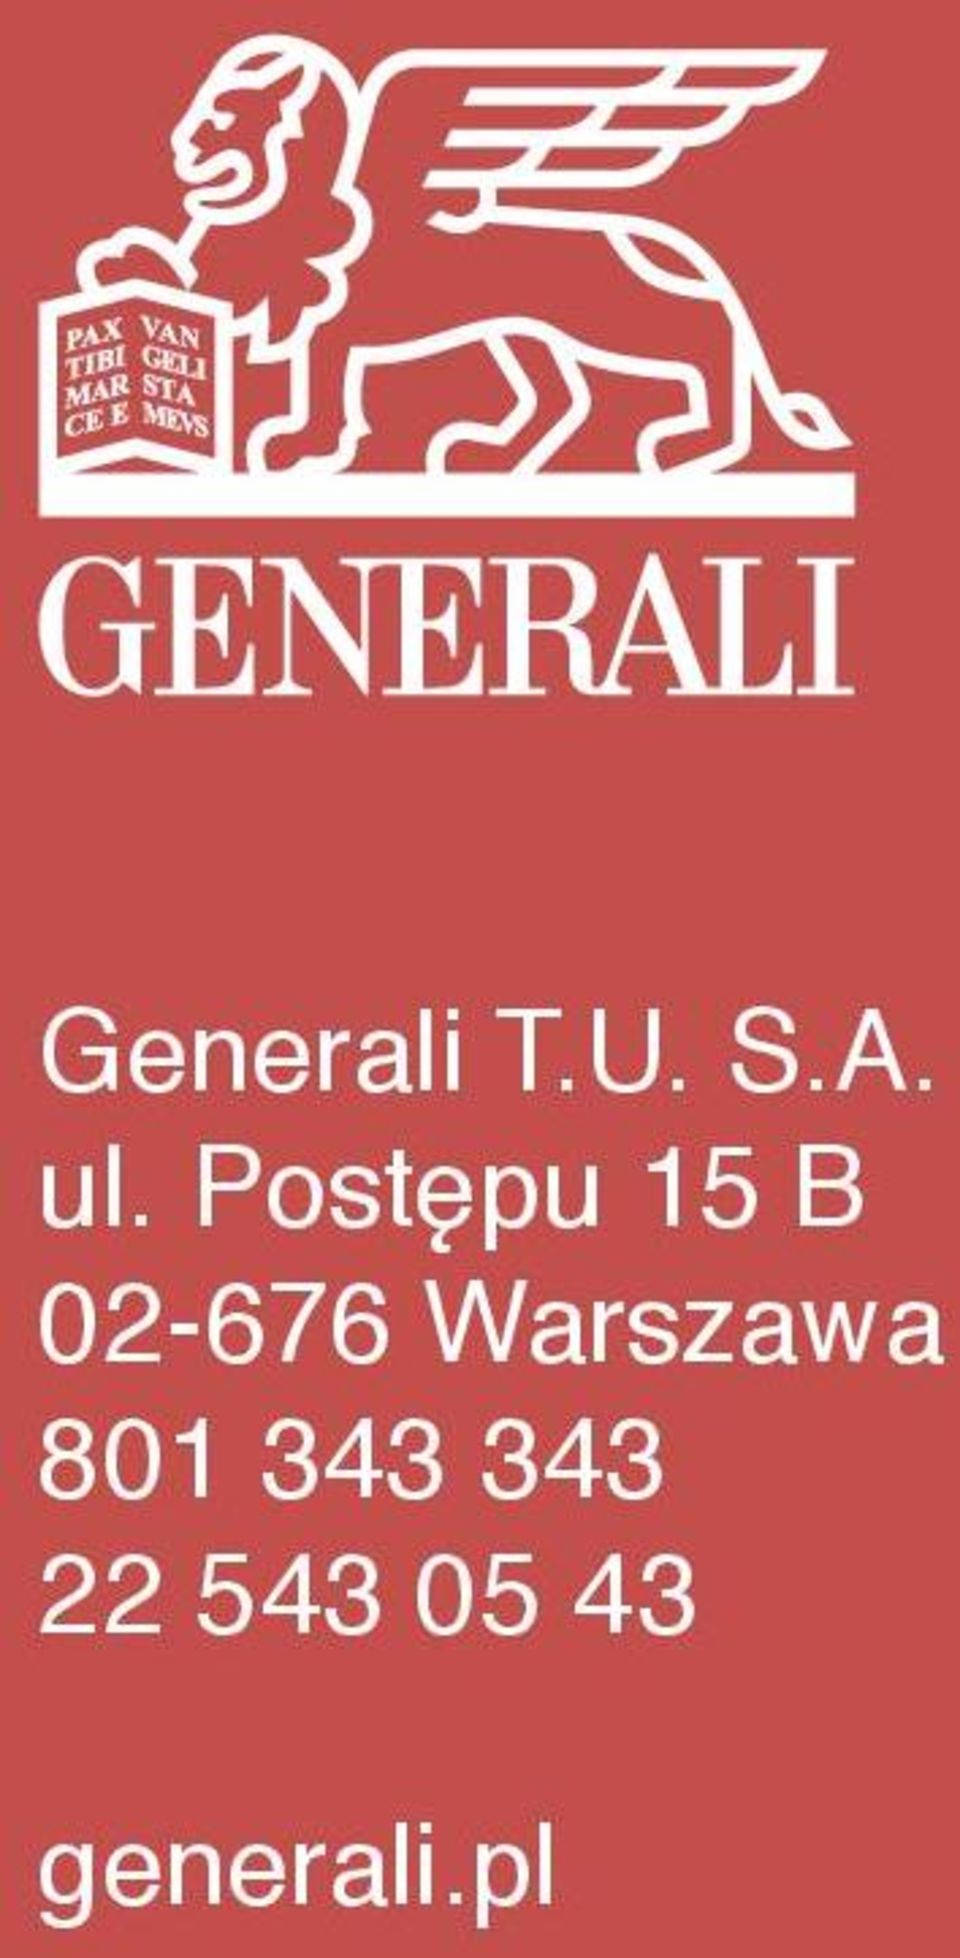 Warszawa 801 343 343